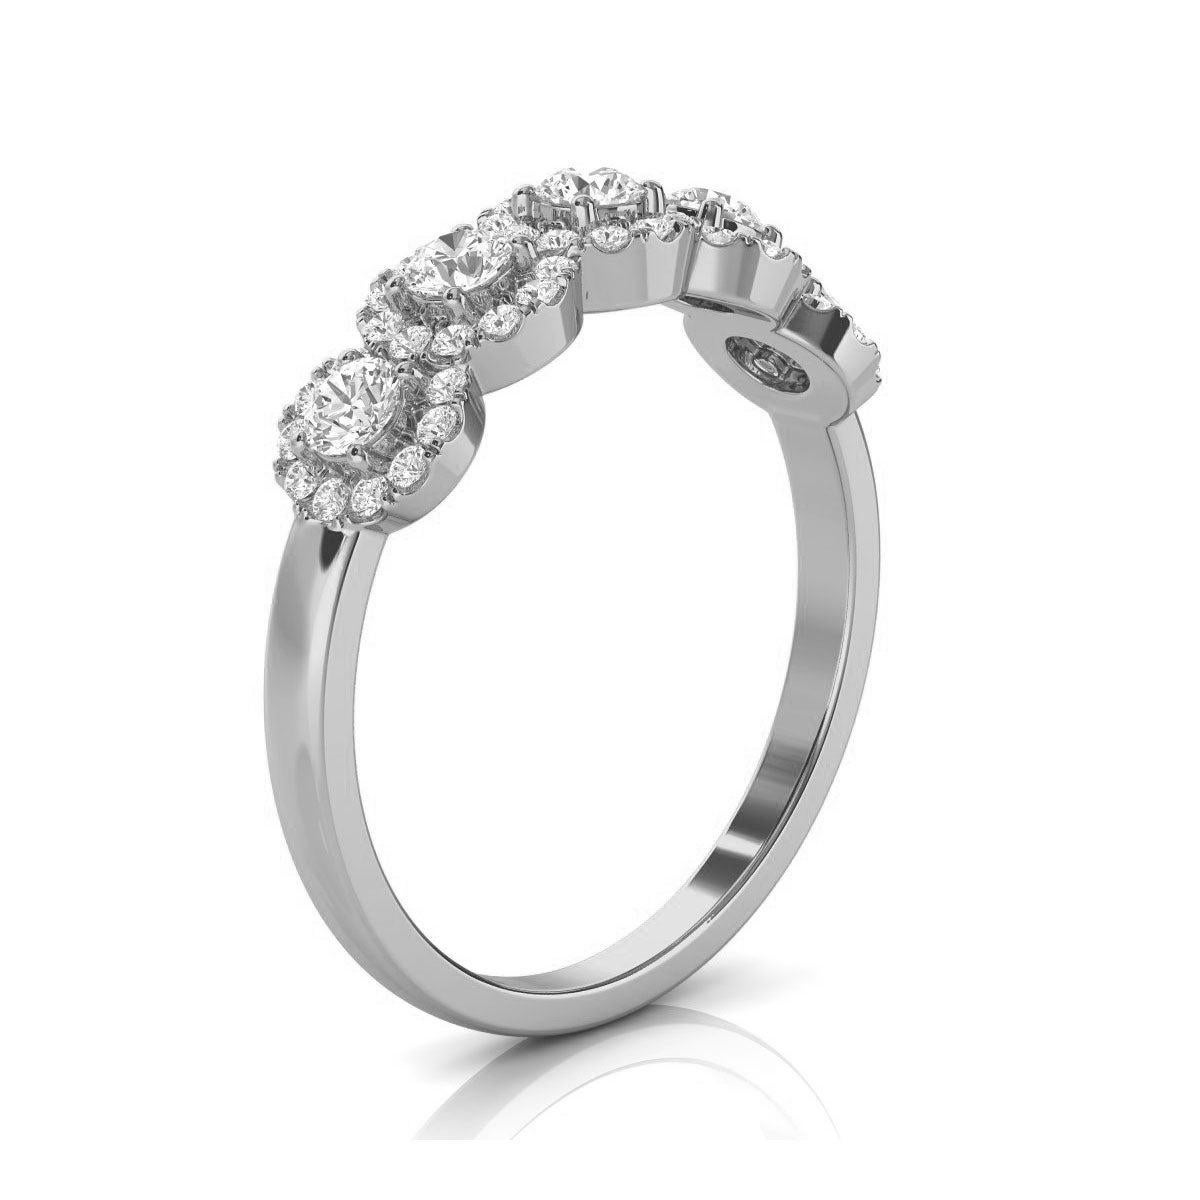 For Sale:  18k White Gold Petite Jenna Halo Diamond Ring '1/2 Ct. Tw' 2